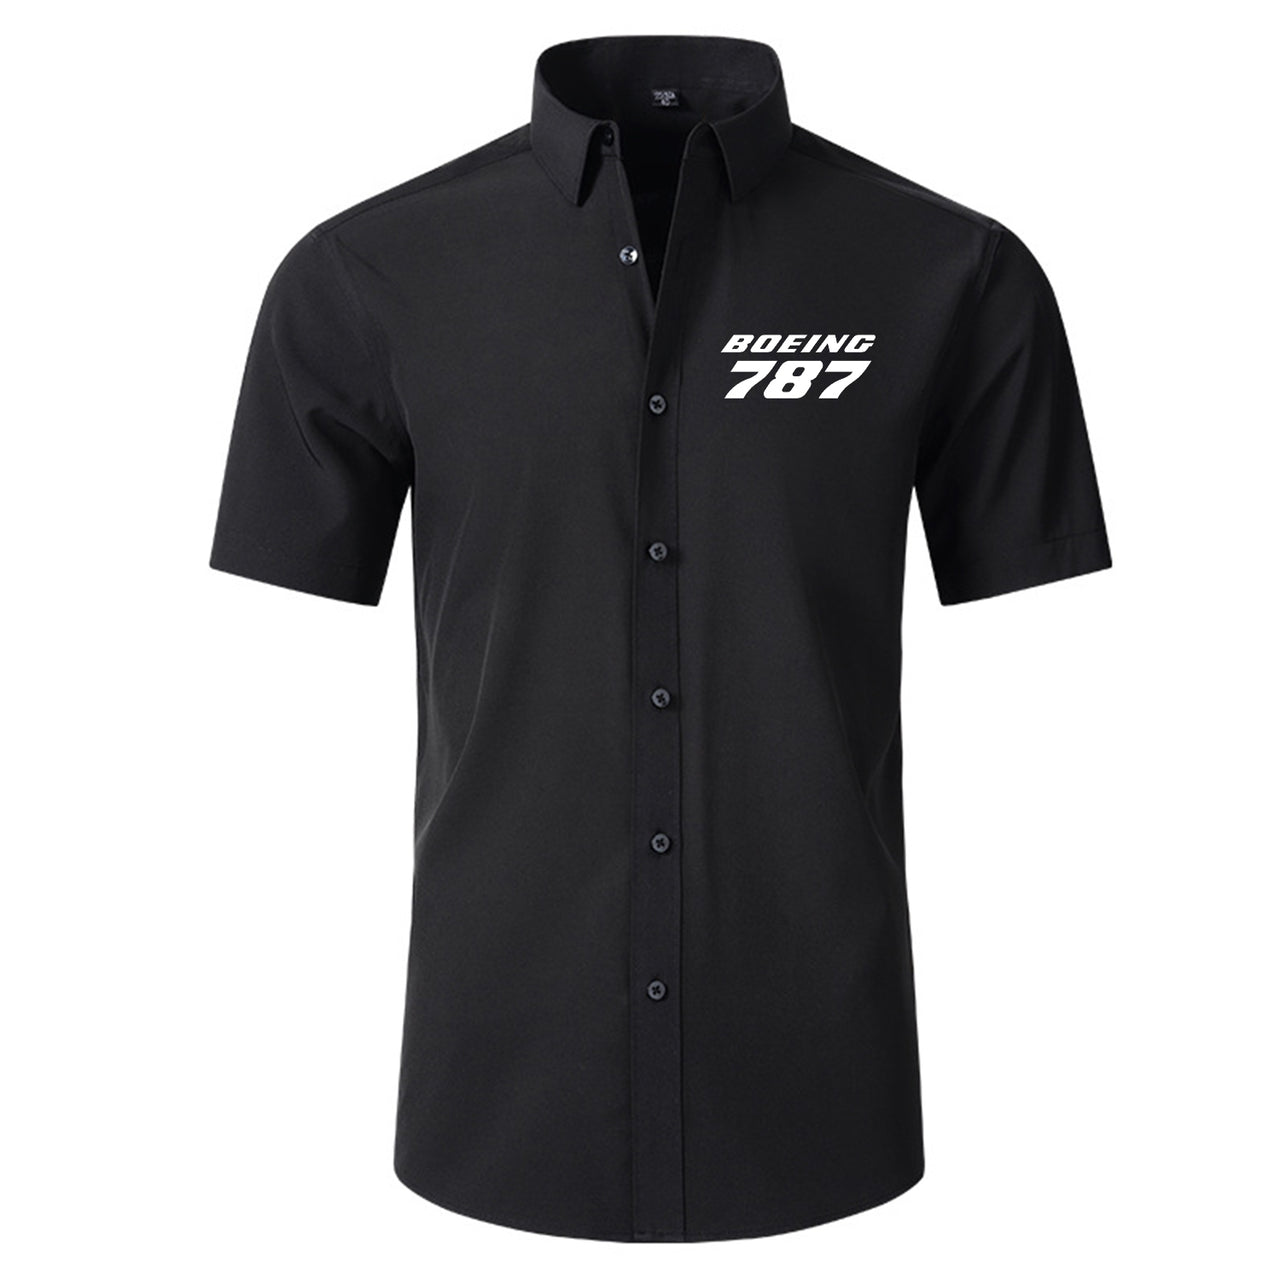 Boeing 787 & Text Designed Short Sleeve Shirts